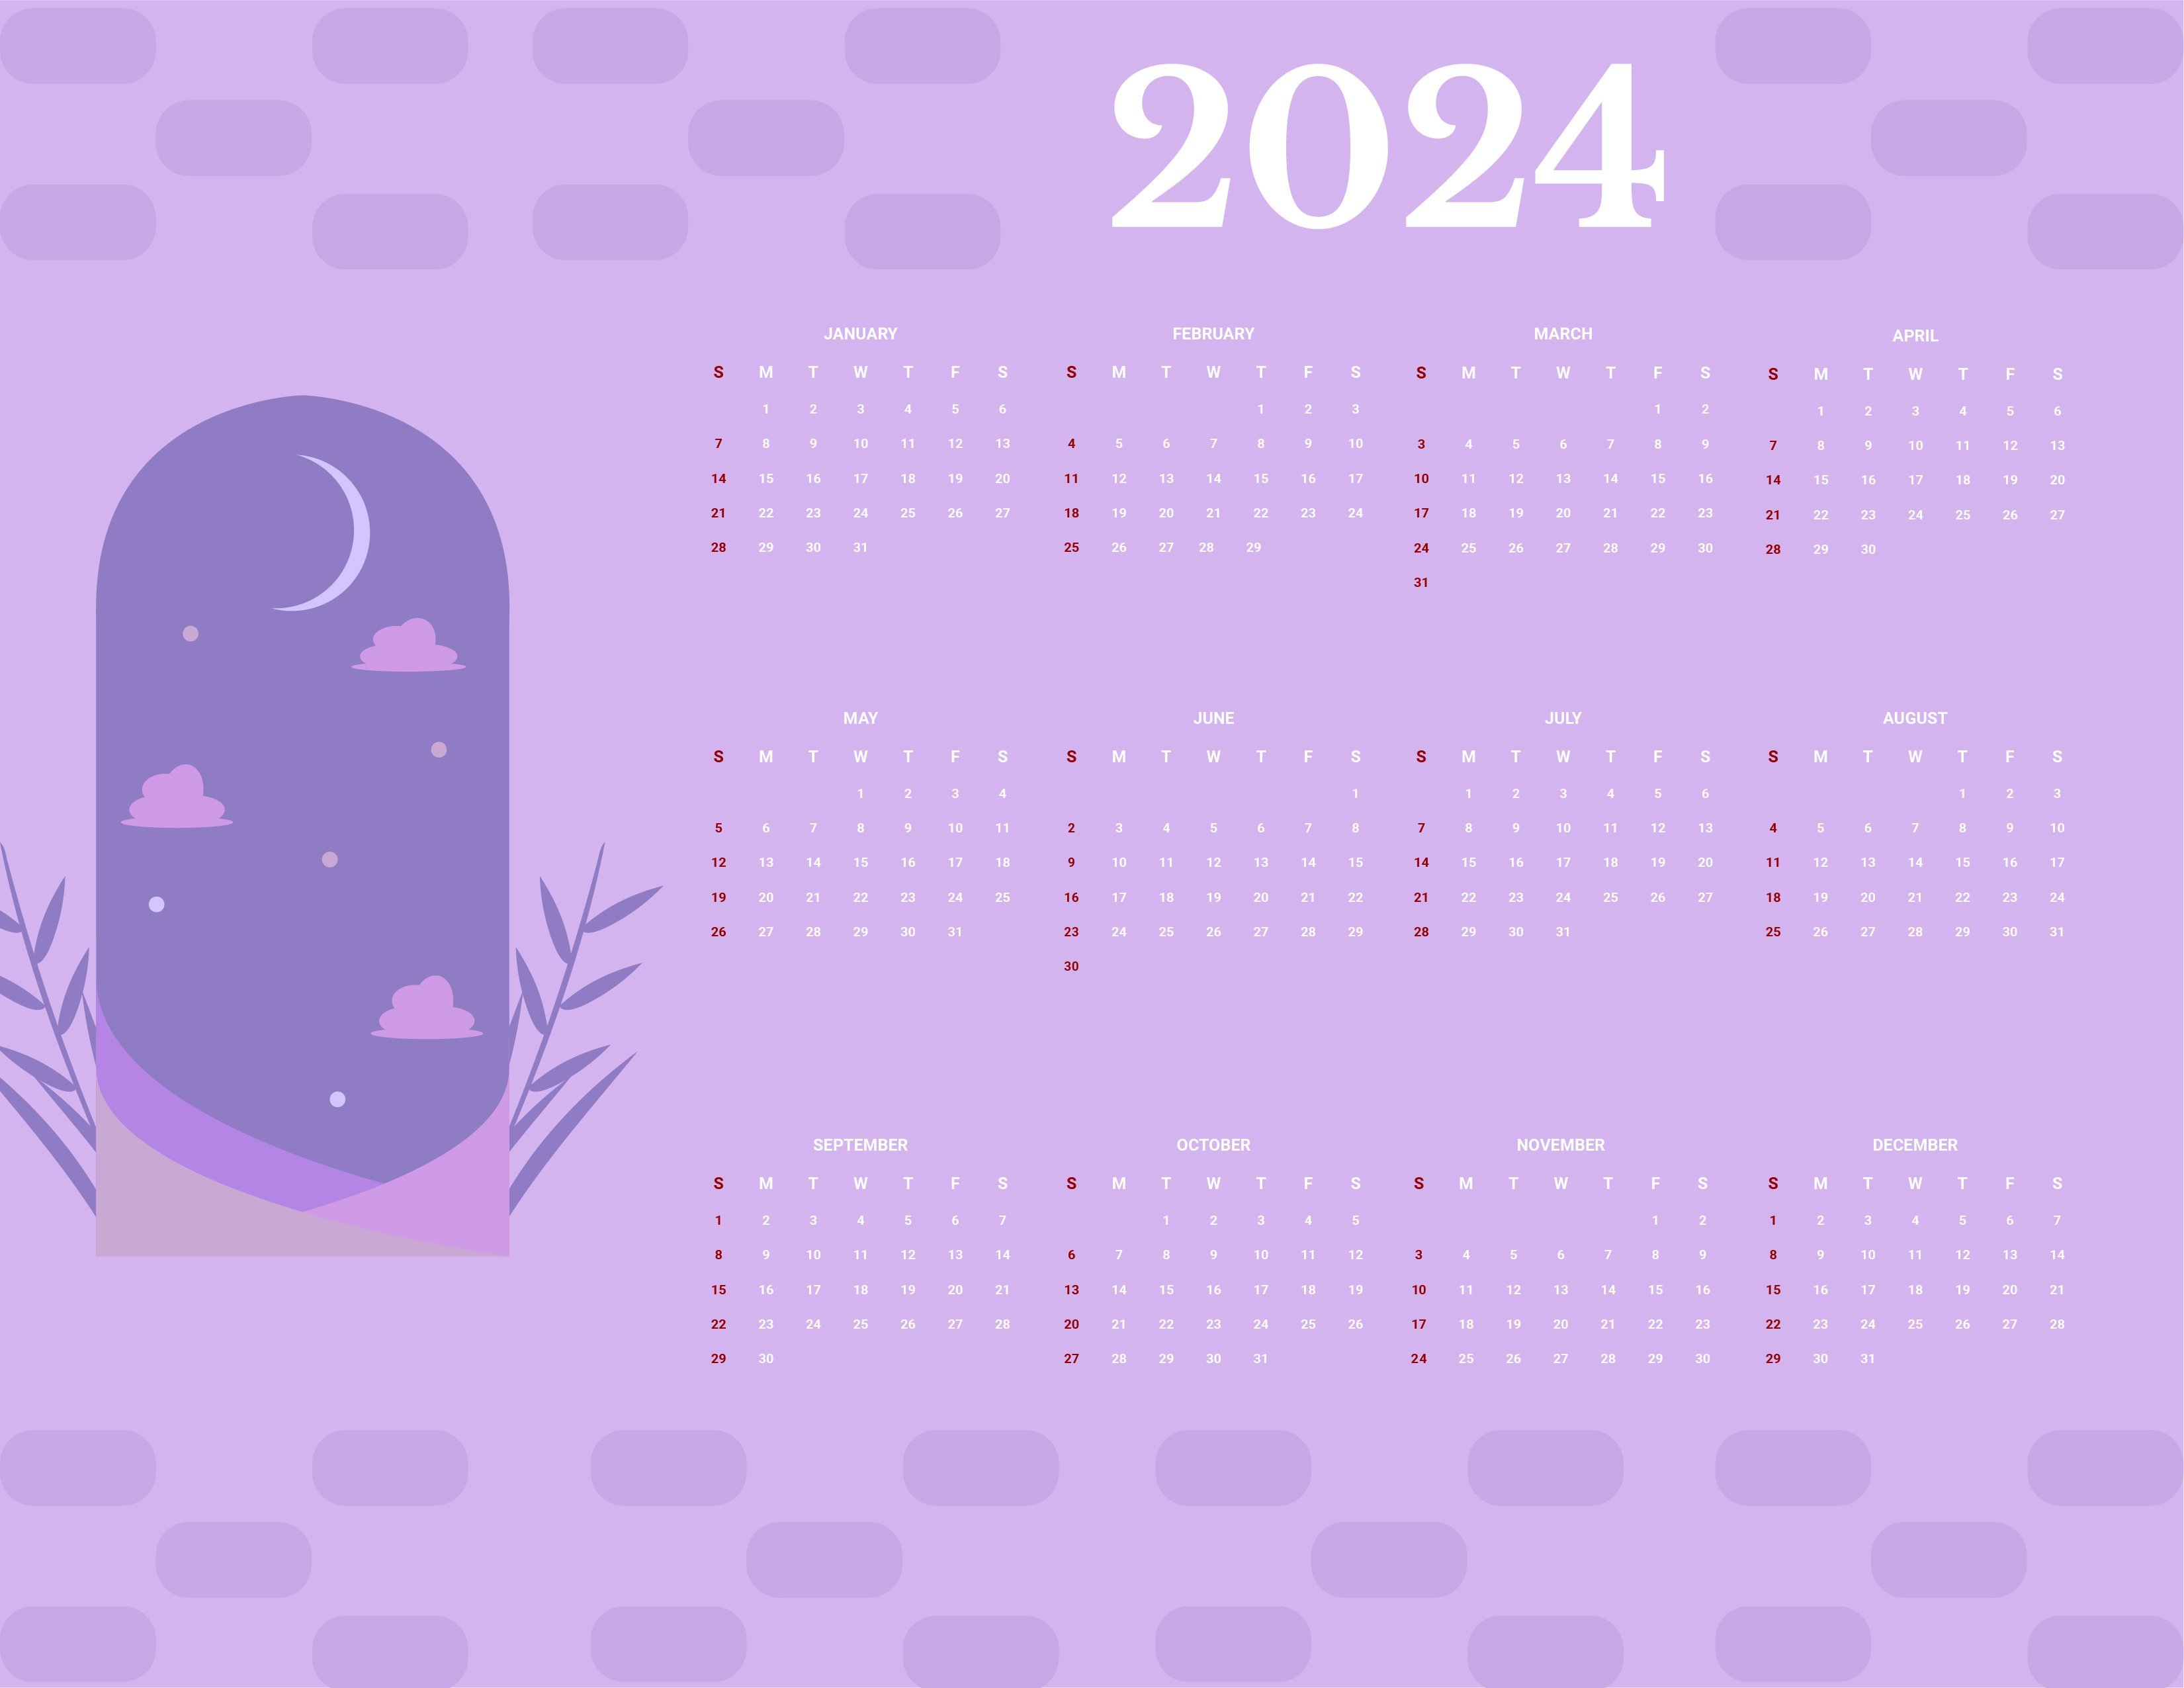 Free Pretty Year 2024 Calendar in Word, Google Docs, Illustrator, EPS, SVG, JPG